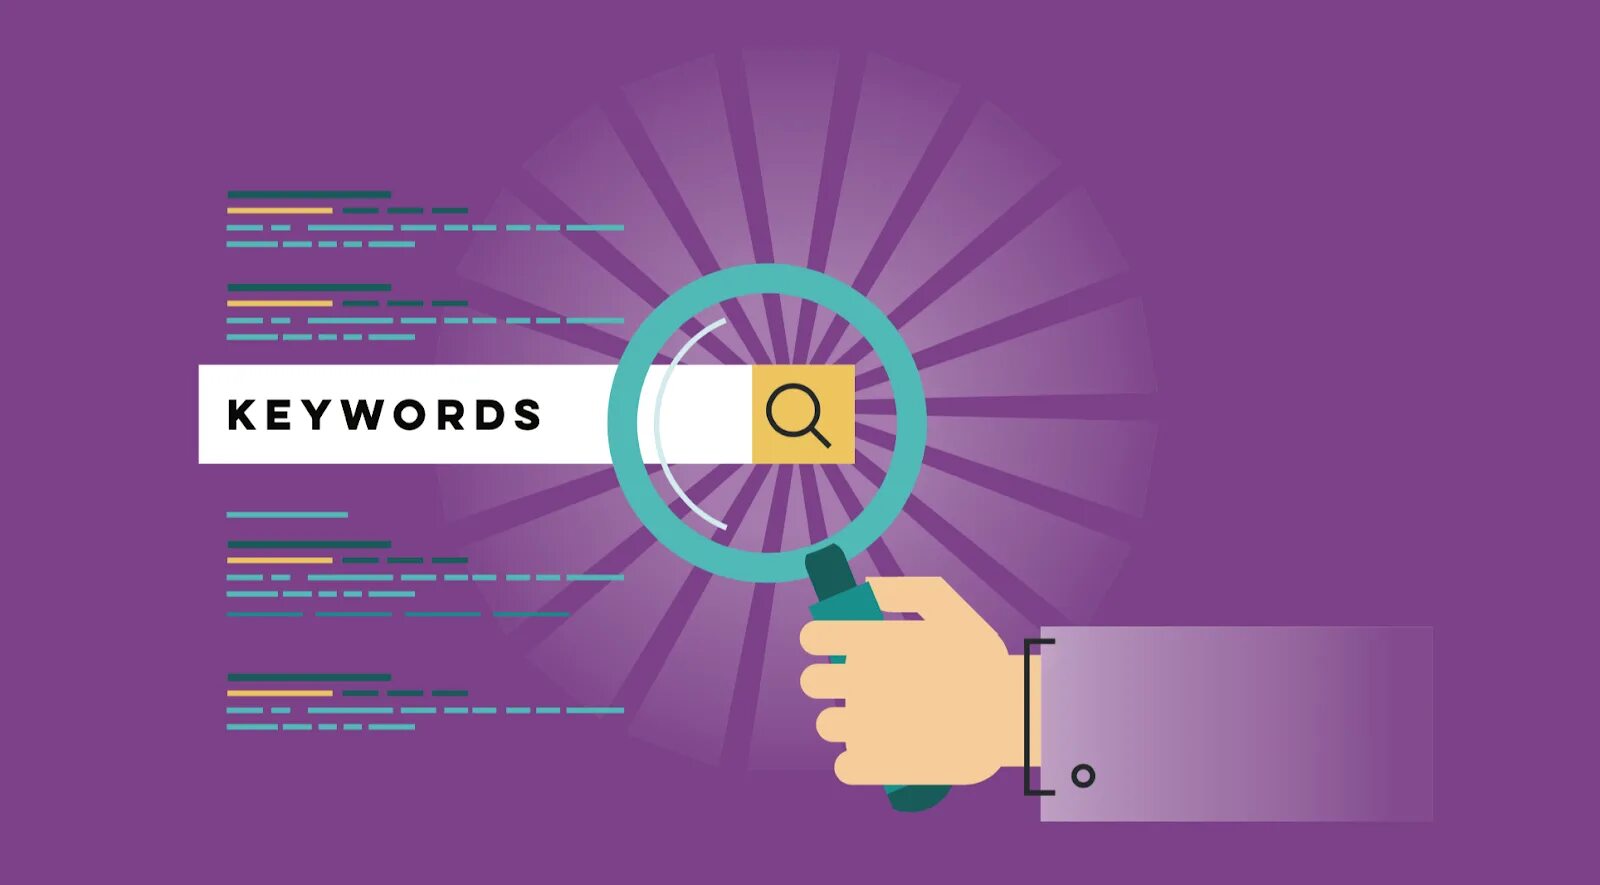 Keywords. Картинки keywords. Keywords статья. Много ключевых слов. Keywords key